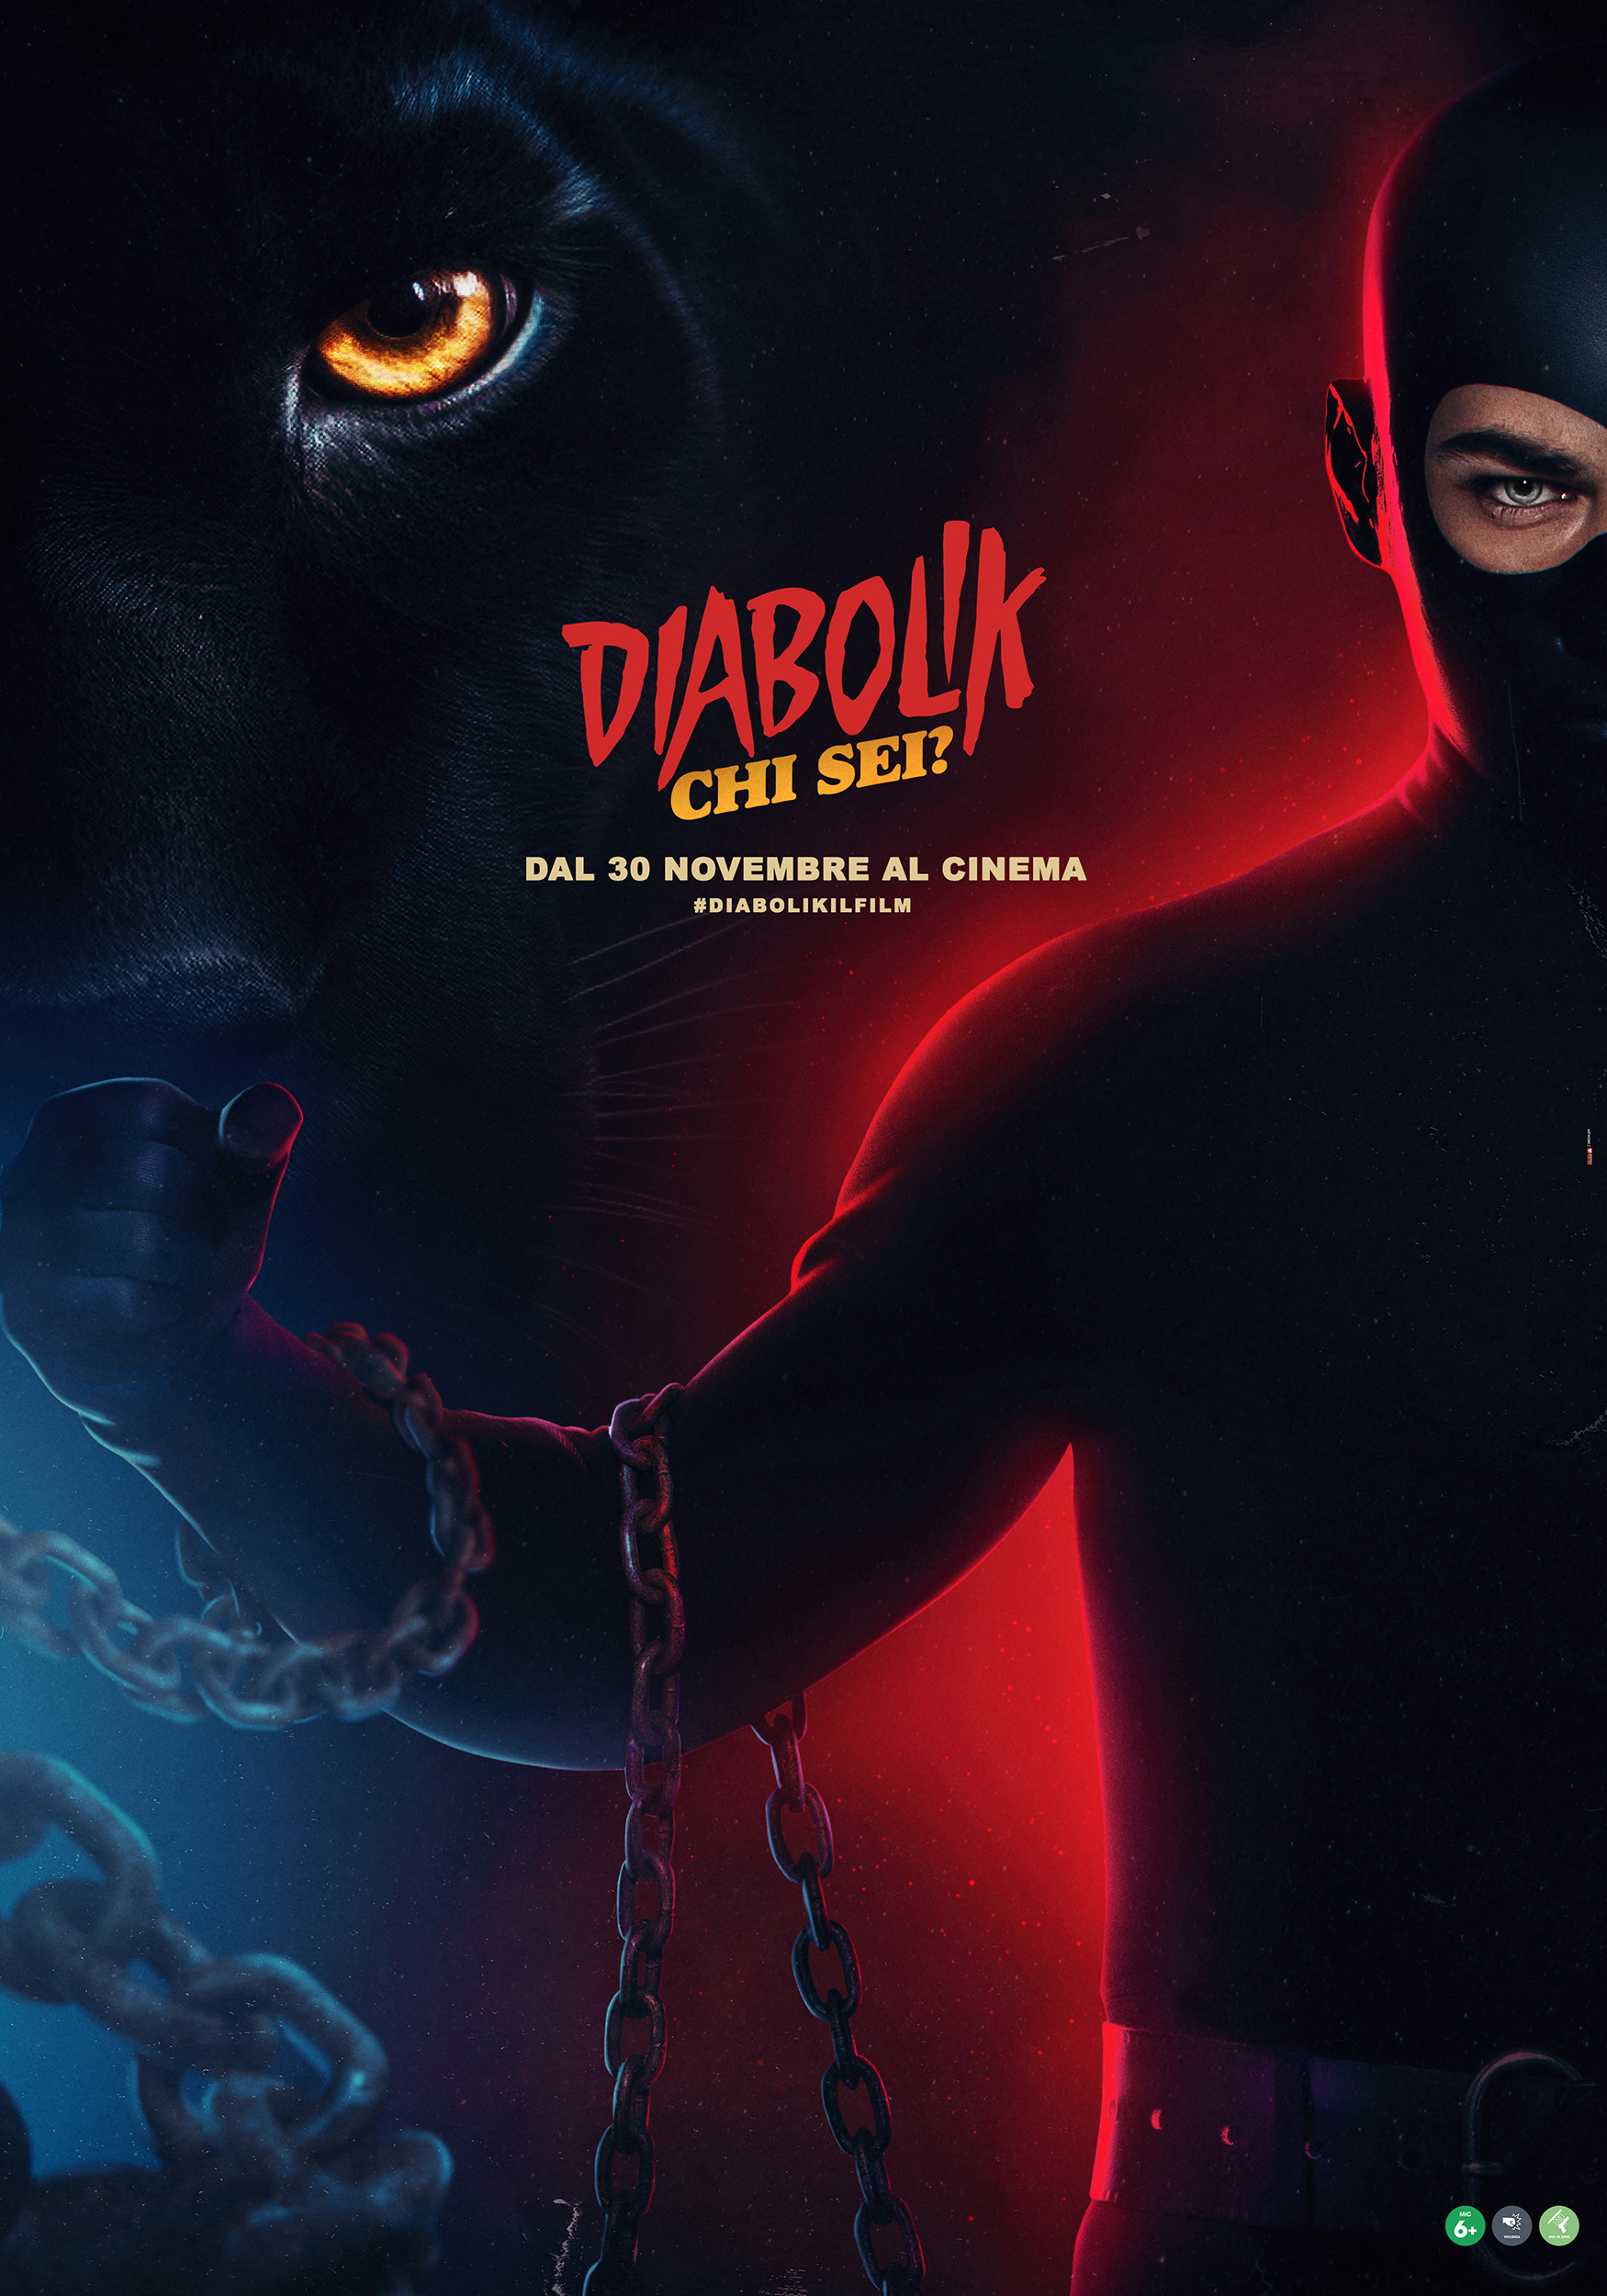 Mega Sized Movie Poster Image for Diabolik chi sei? (#6 of 6)